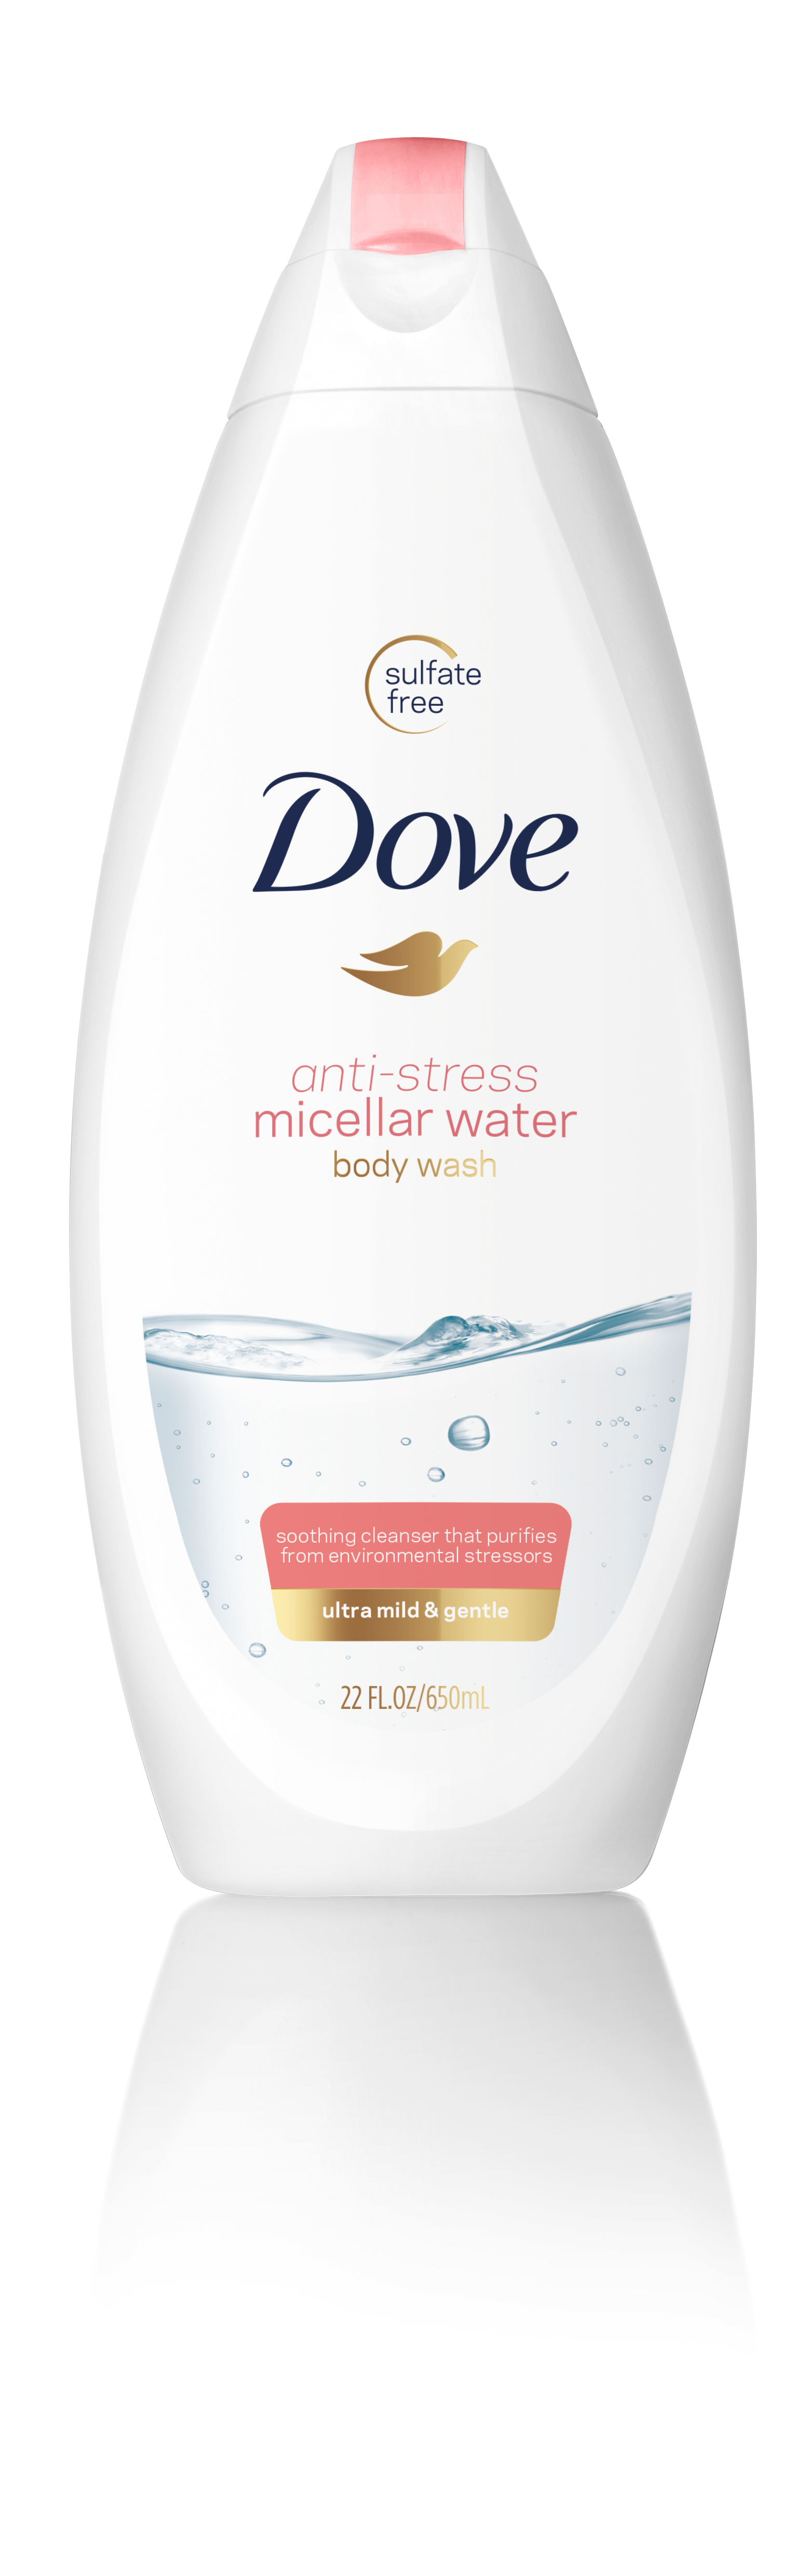 Dove Anti-Stress Micellar Water Body Wash.png